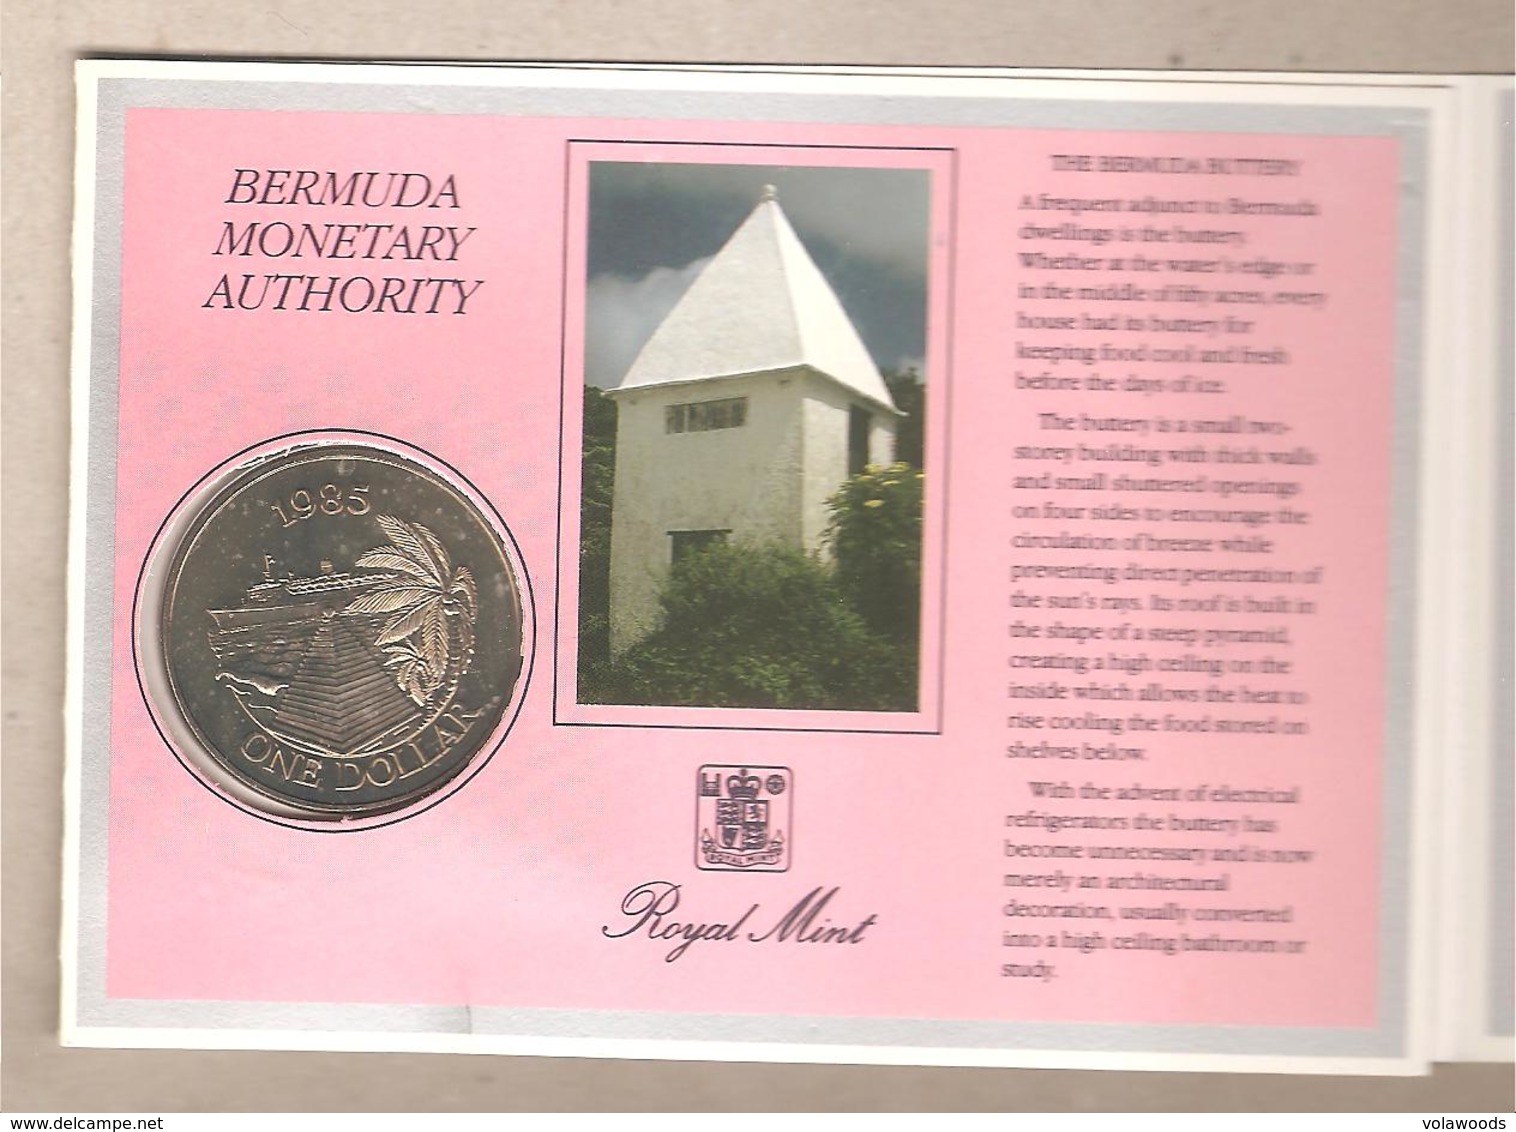 Bermuda - Moneta FdS Da 1 Dollaro In Folder Della Bermuda's Cruise Ships - 1985 - Bermudas